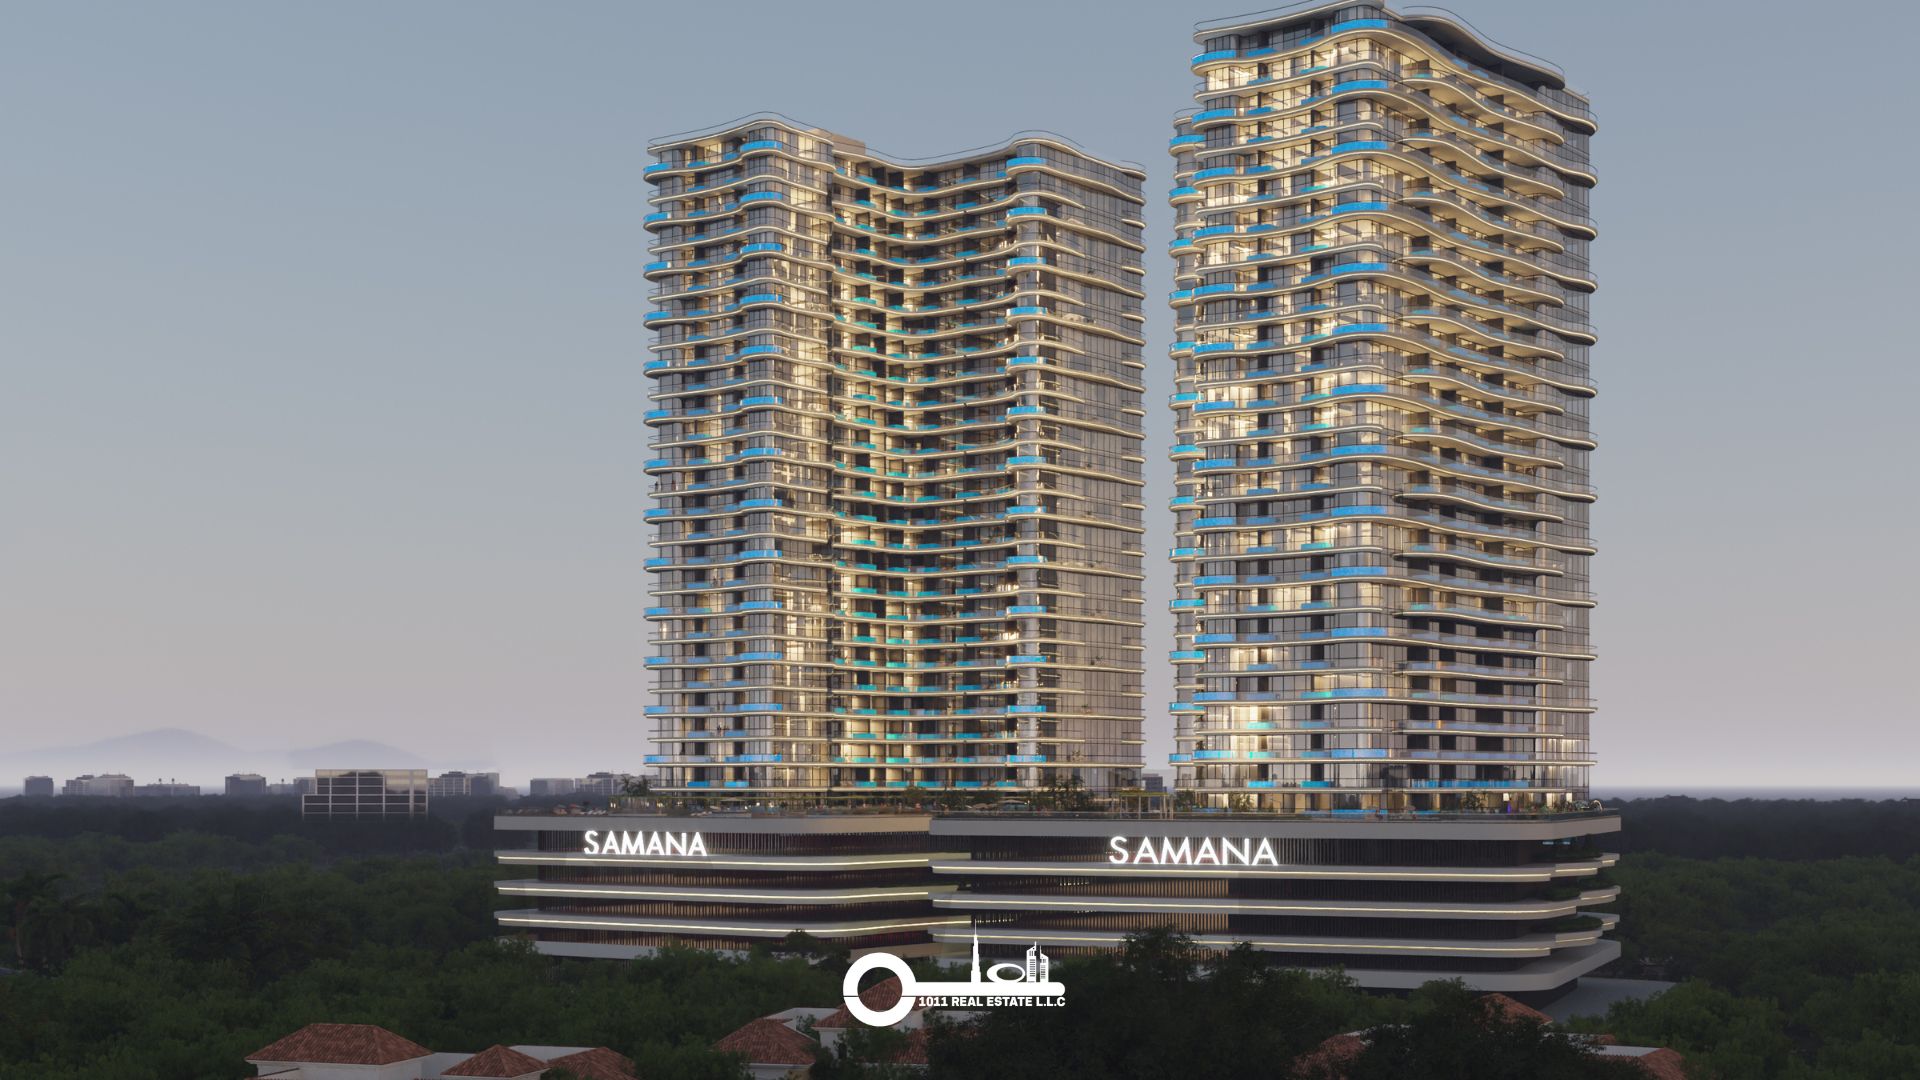 Samana Barari Views 2 1011 Real Estate Dubai